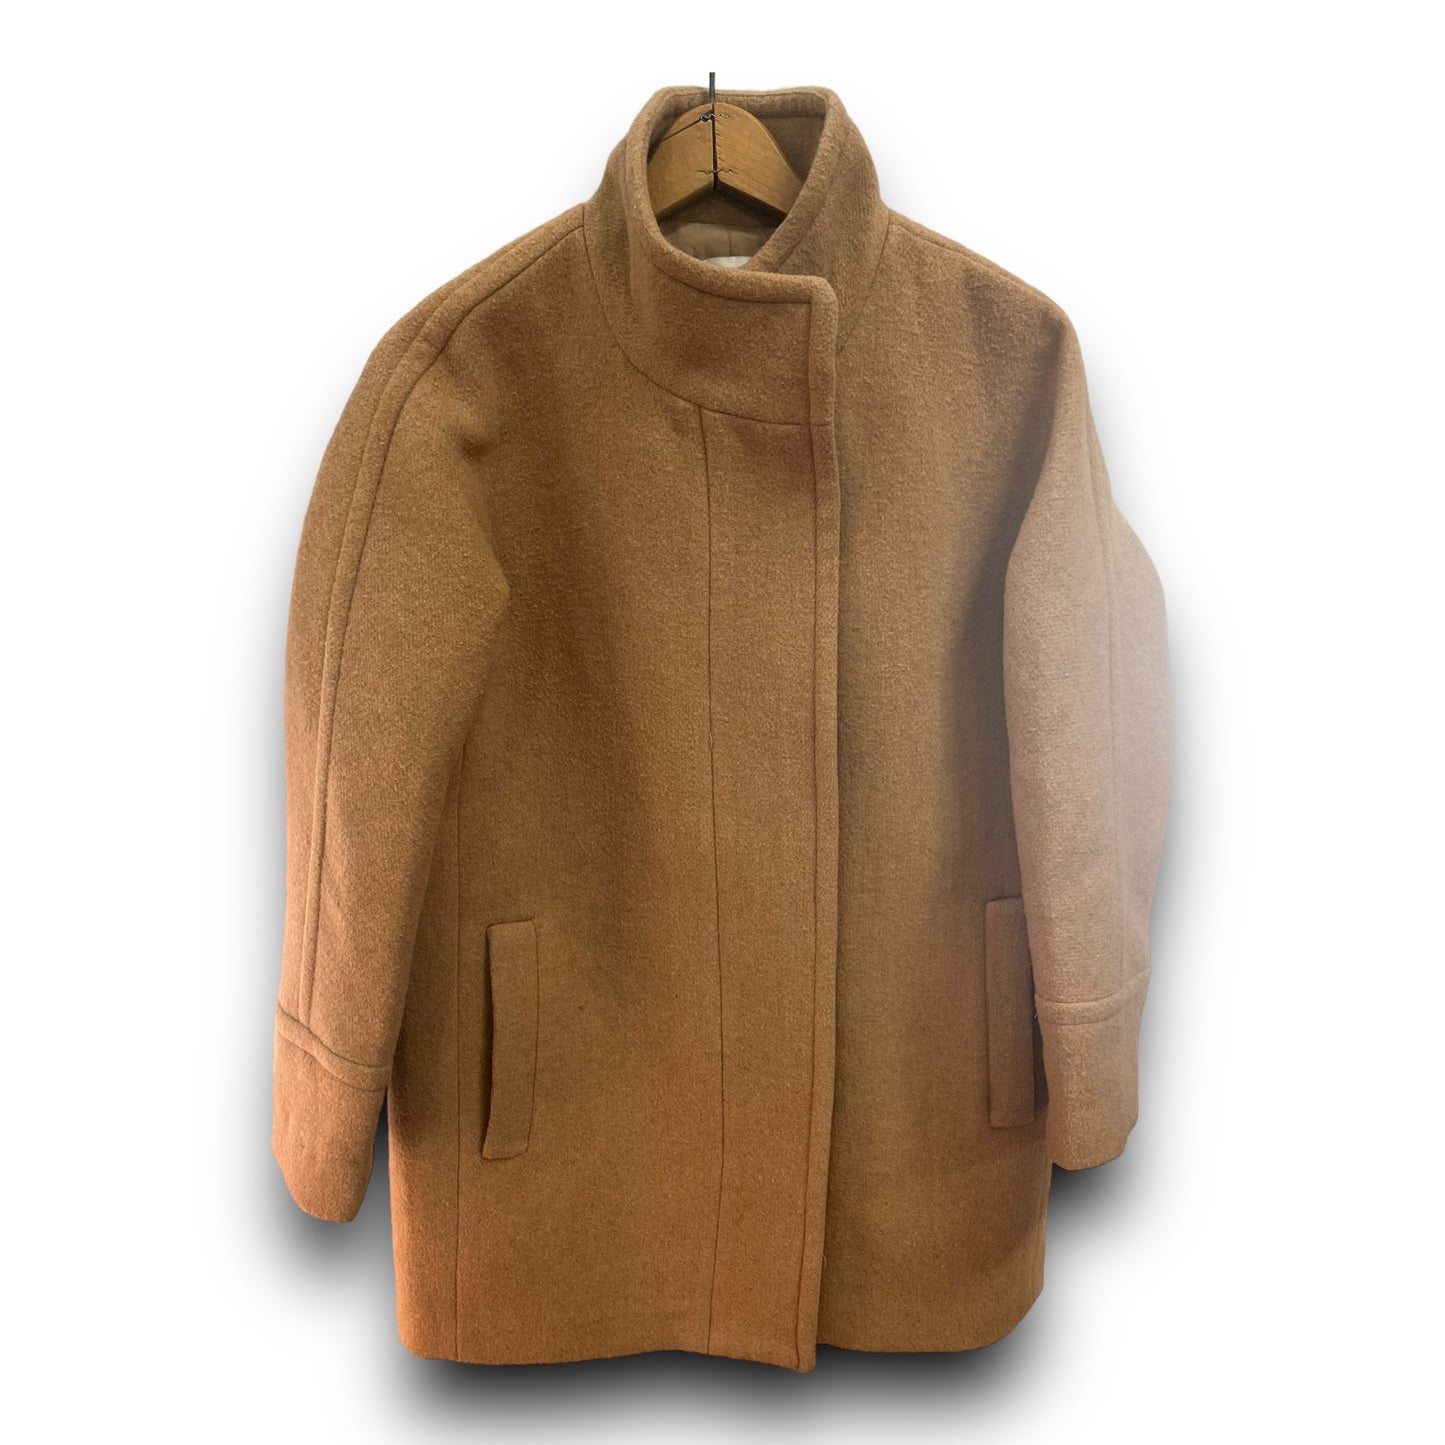 Coat Peacoat By J. Crew  Size: 6petite